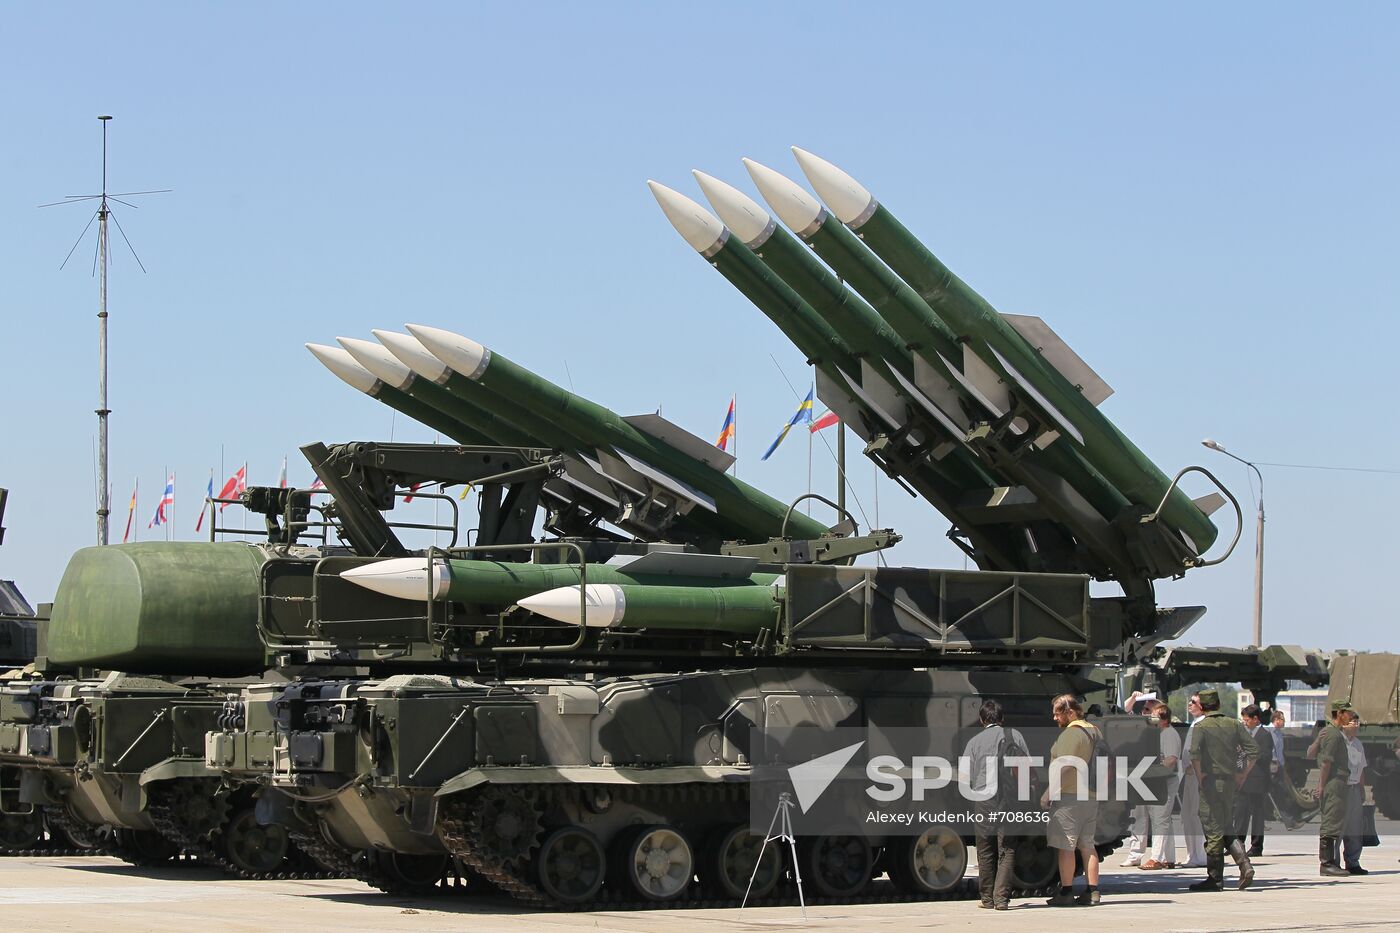 Buk-M1 anti-aircraft missile system.